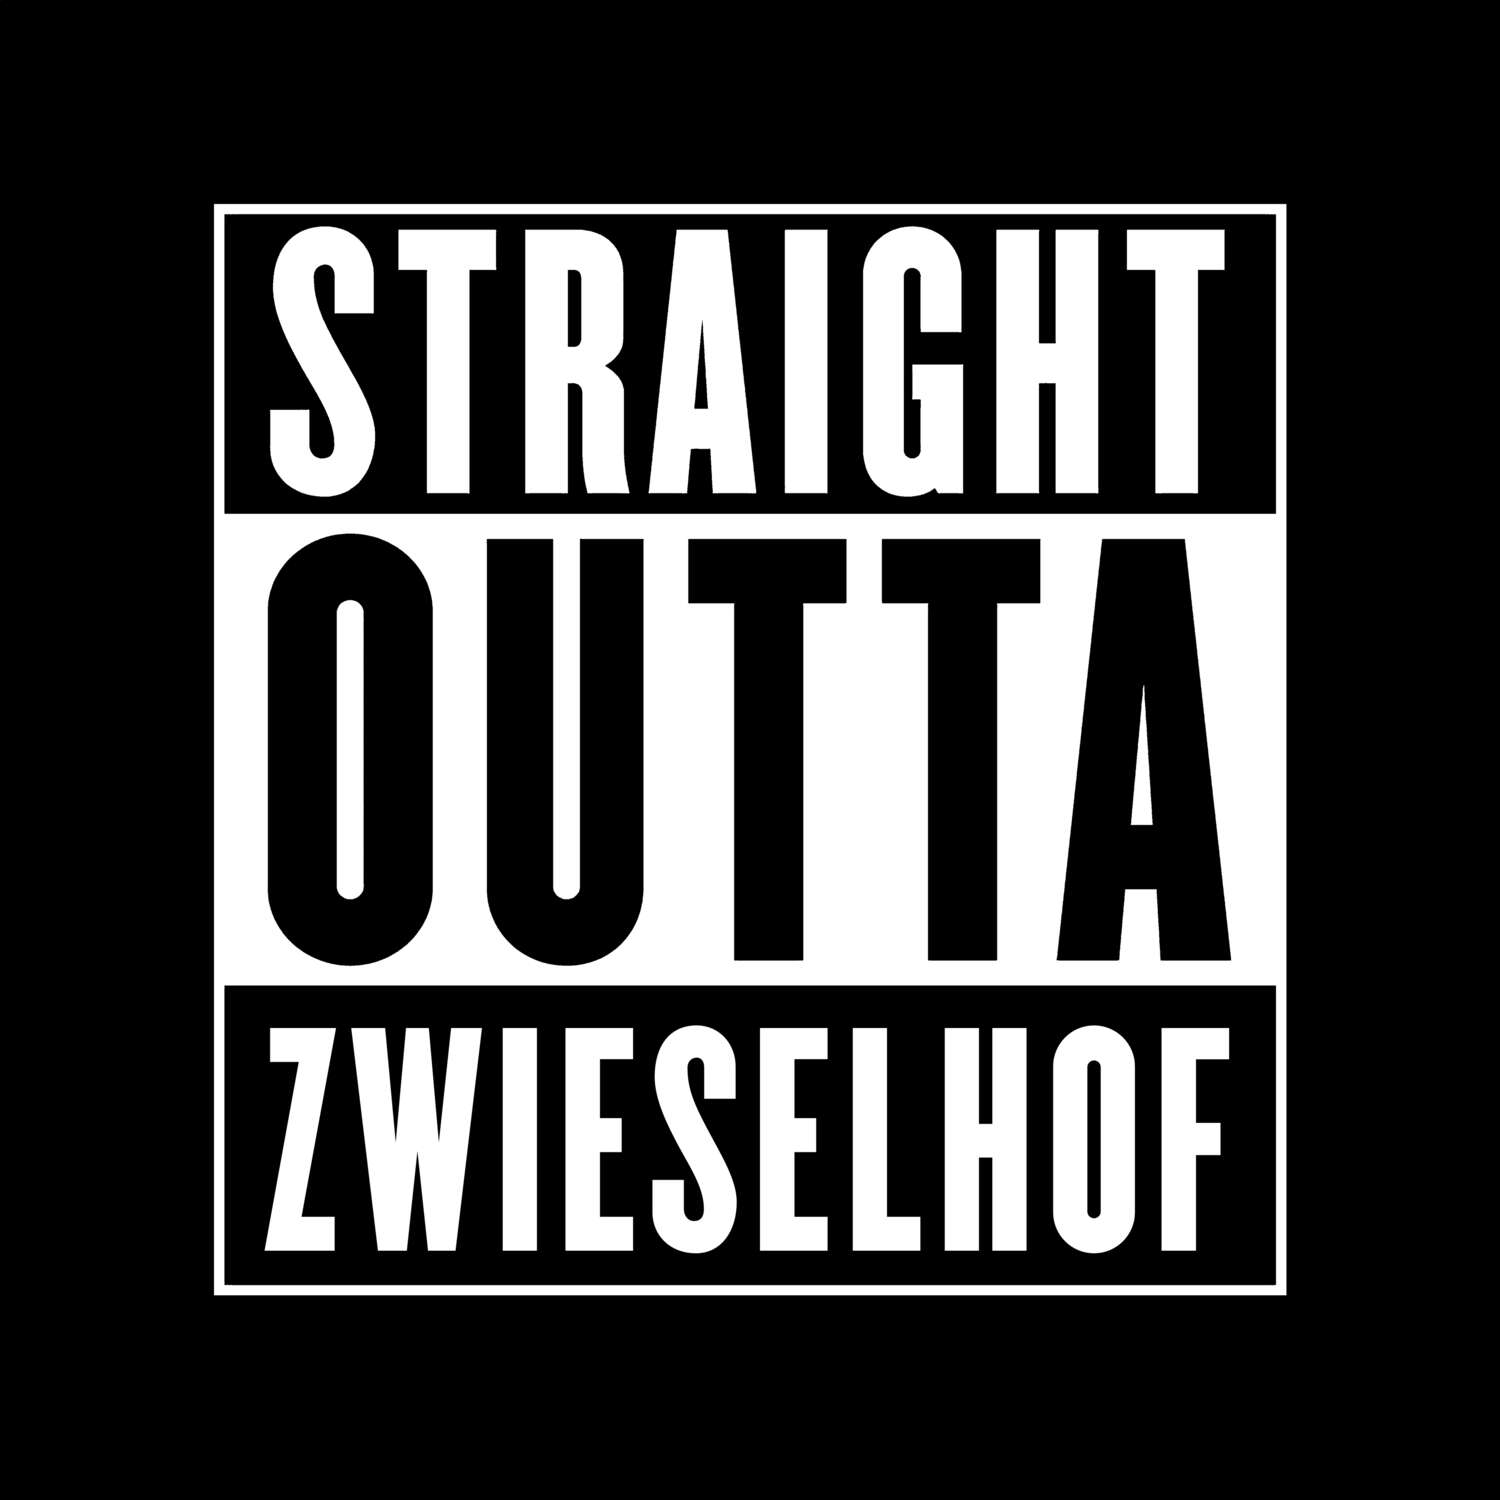 Zwieselhof T-Shirt »Straight Outta«